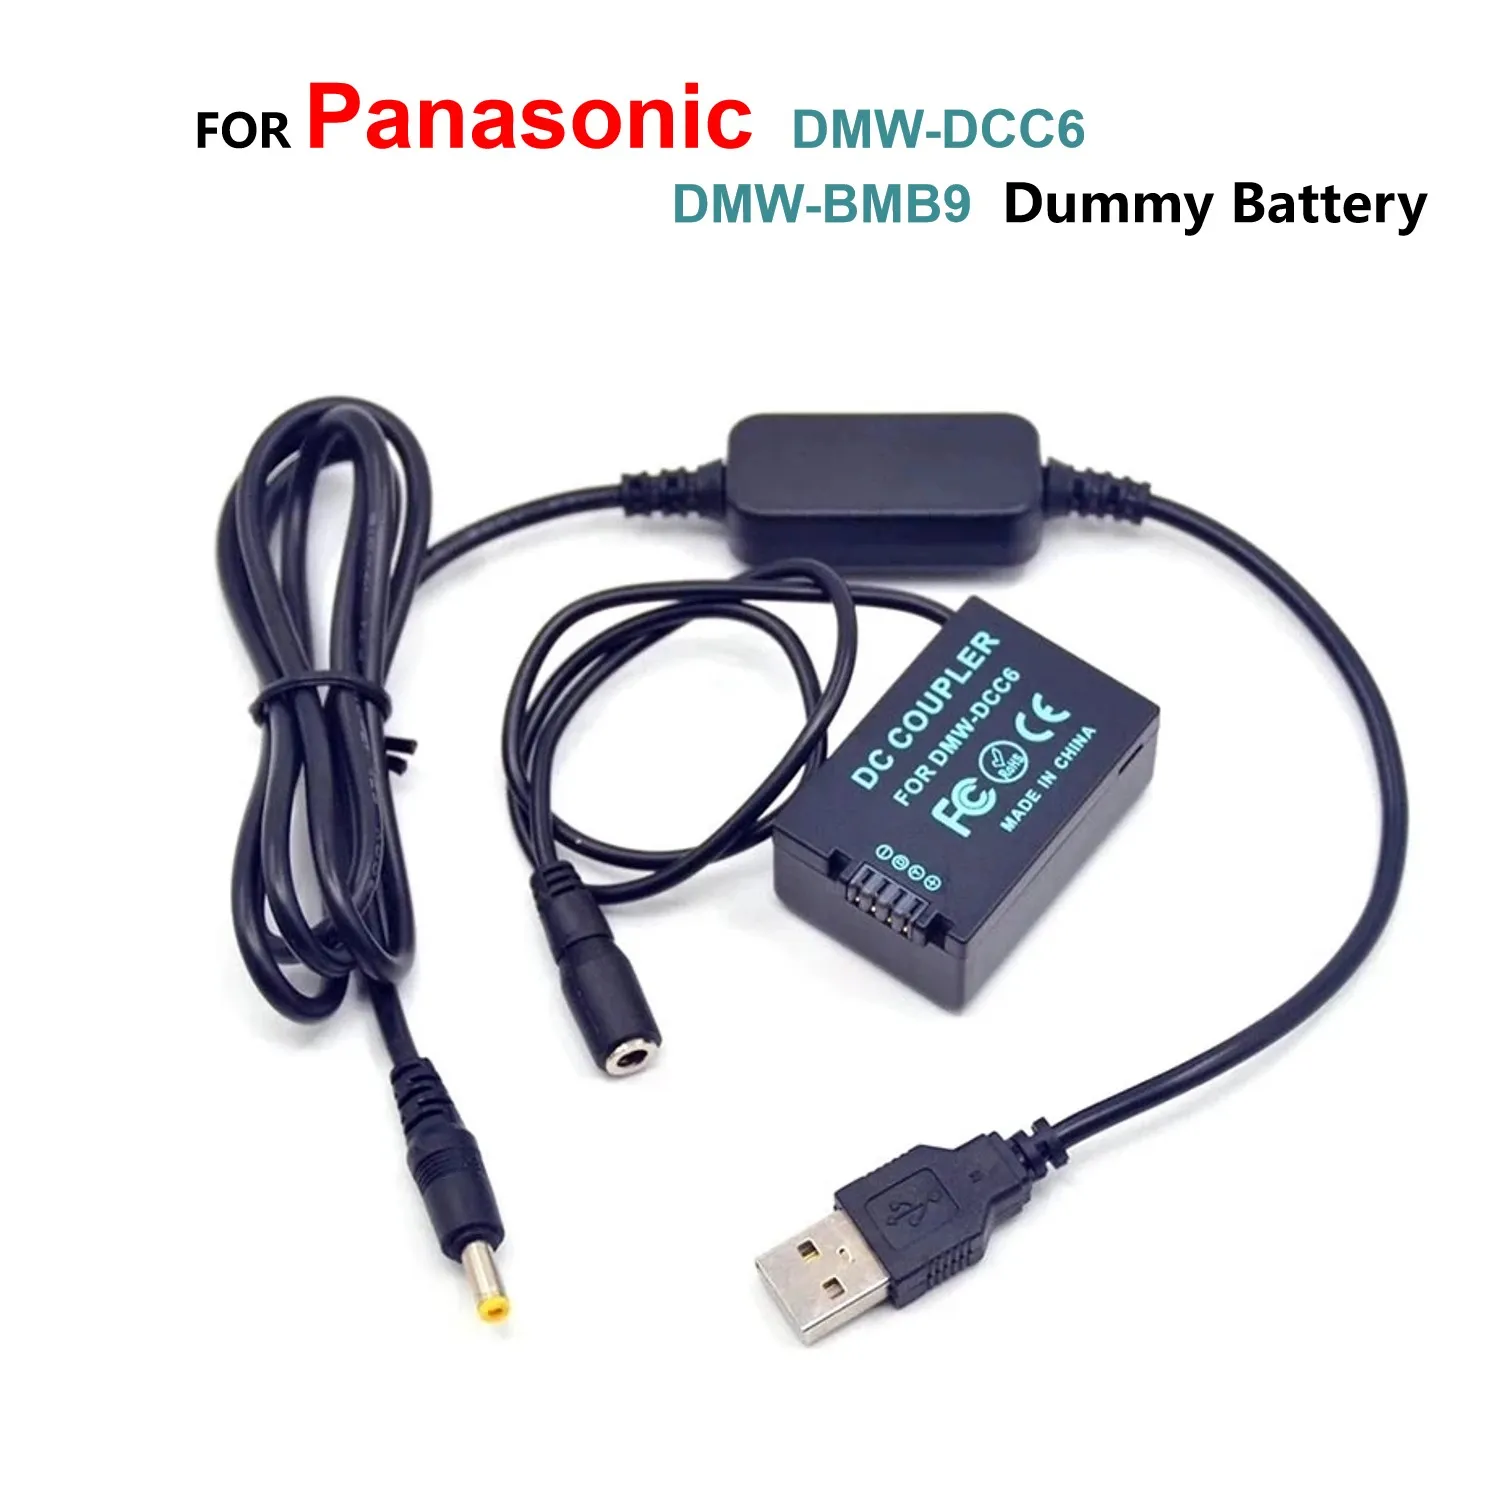 

5V USB Cable Adapter + DMW-DCC6 DMW-BMB9 Dummy Battery Power Bank For Panasonic Lumix DMC-FZ45 FZ47 FZ48 FZ60 FZ70 FZ72 FZ100